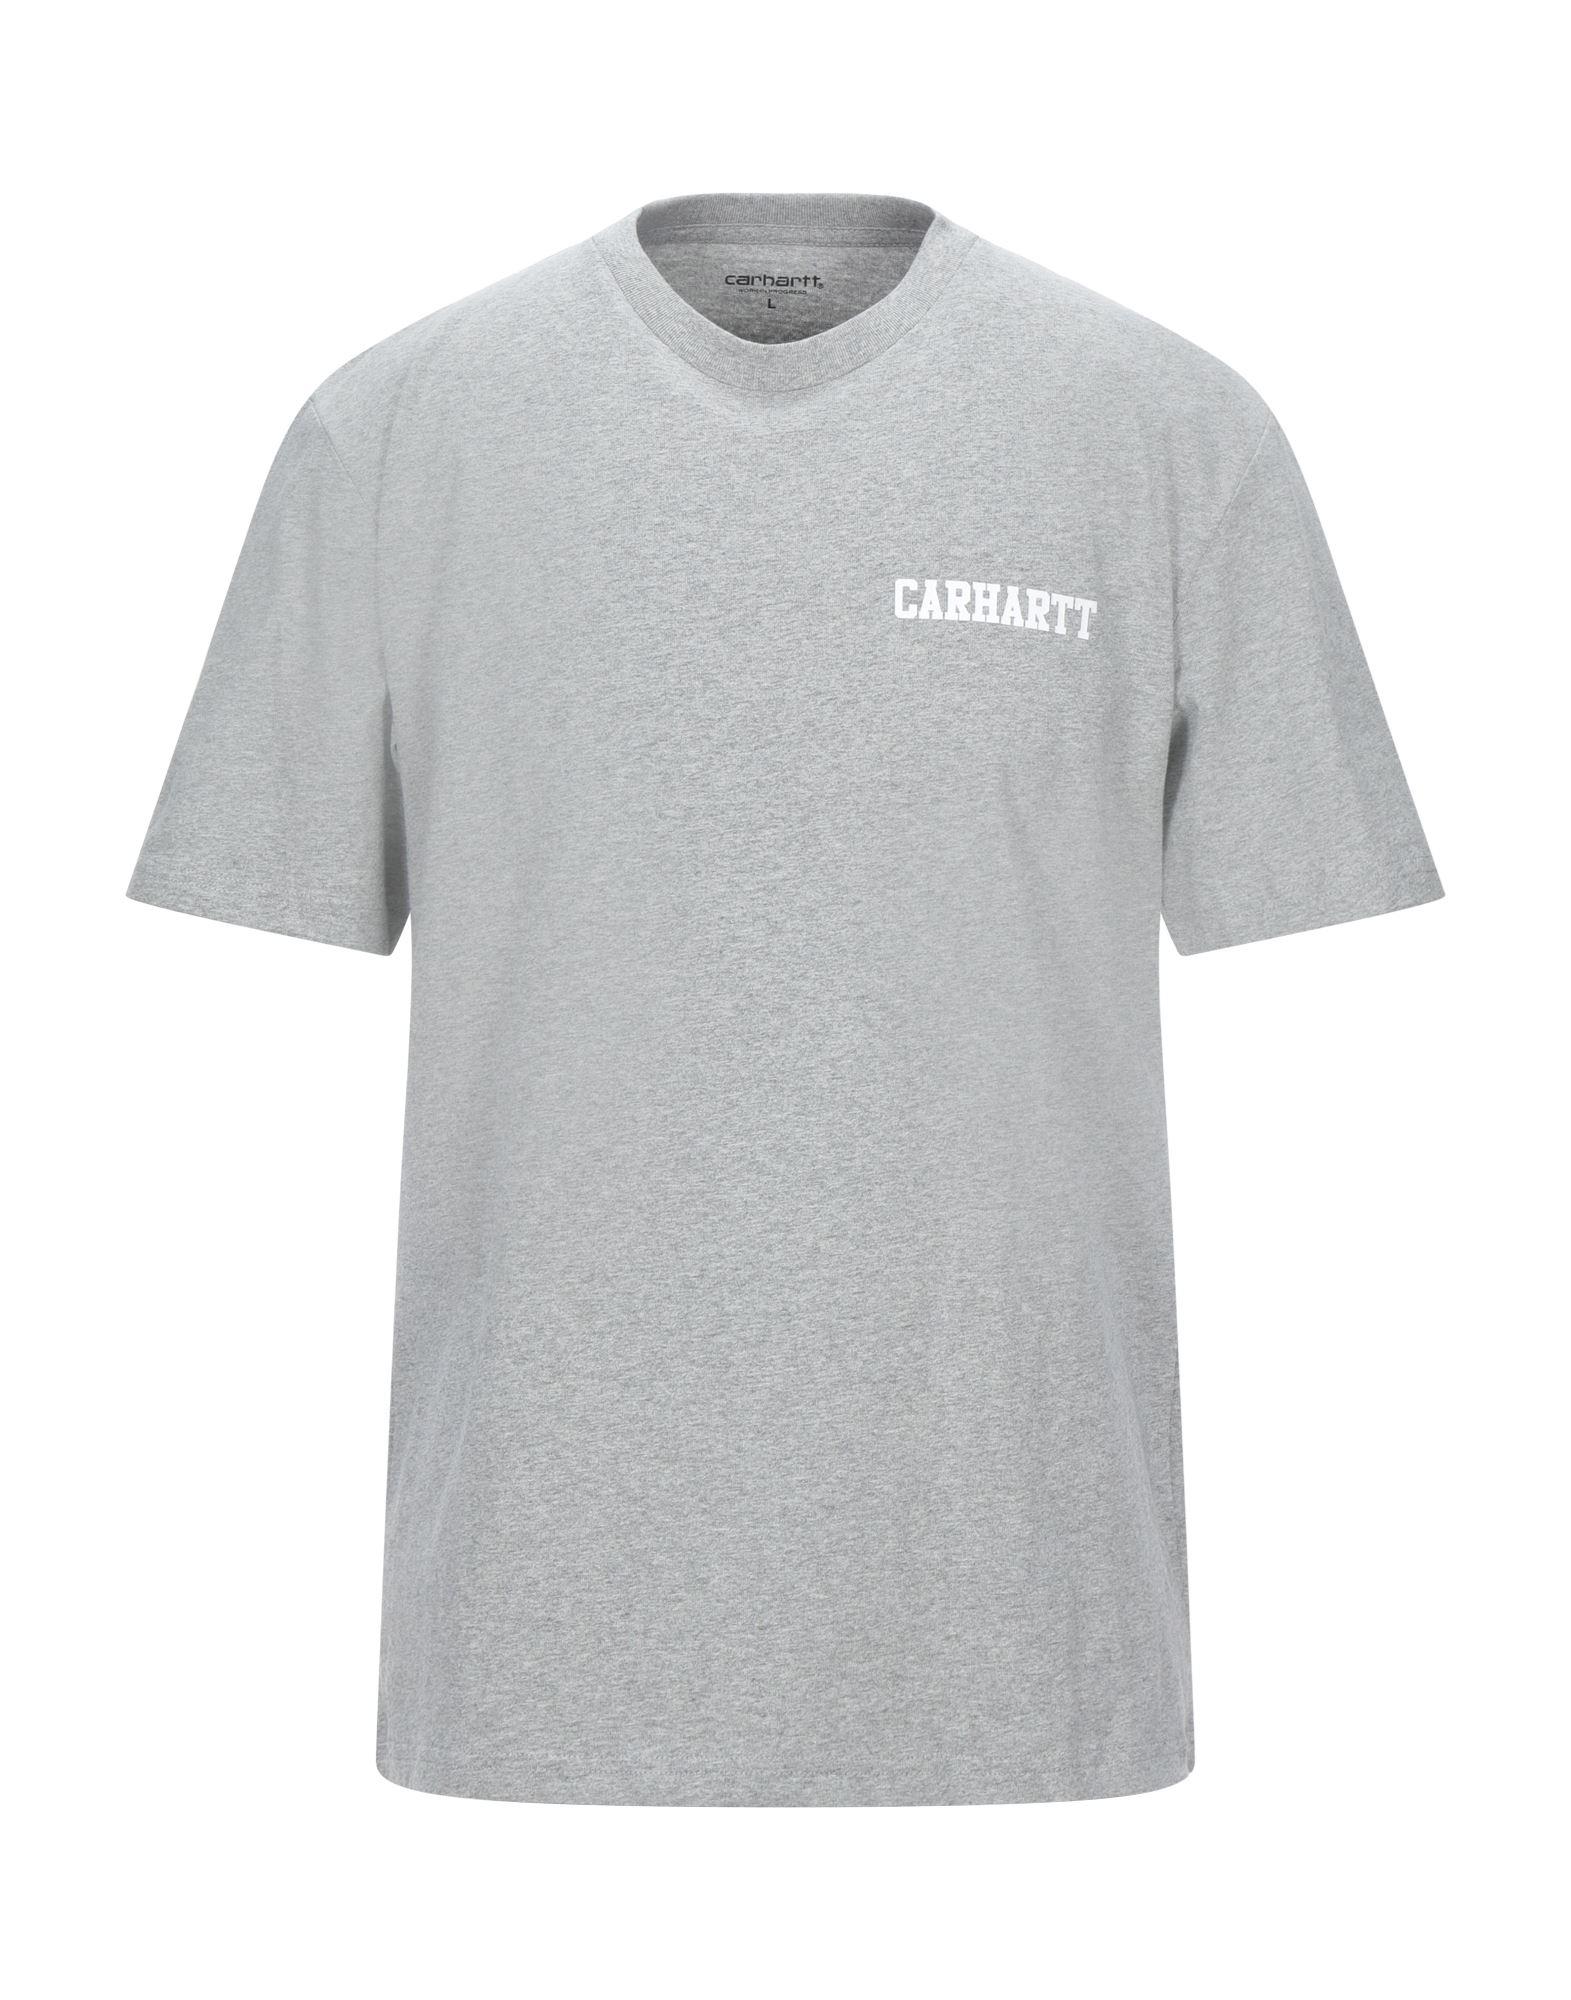 Carhartt T-shirt in Grey (Gray) for Men - Lyst